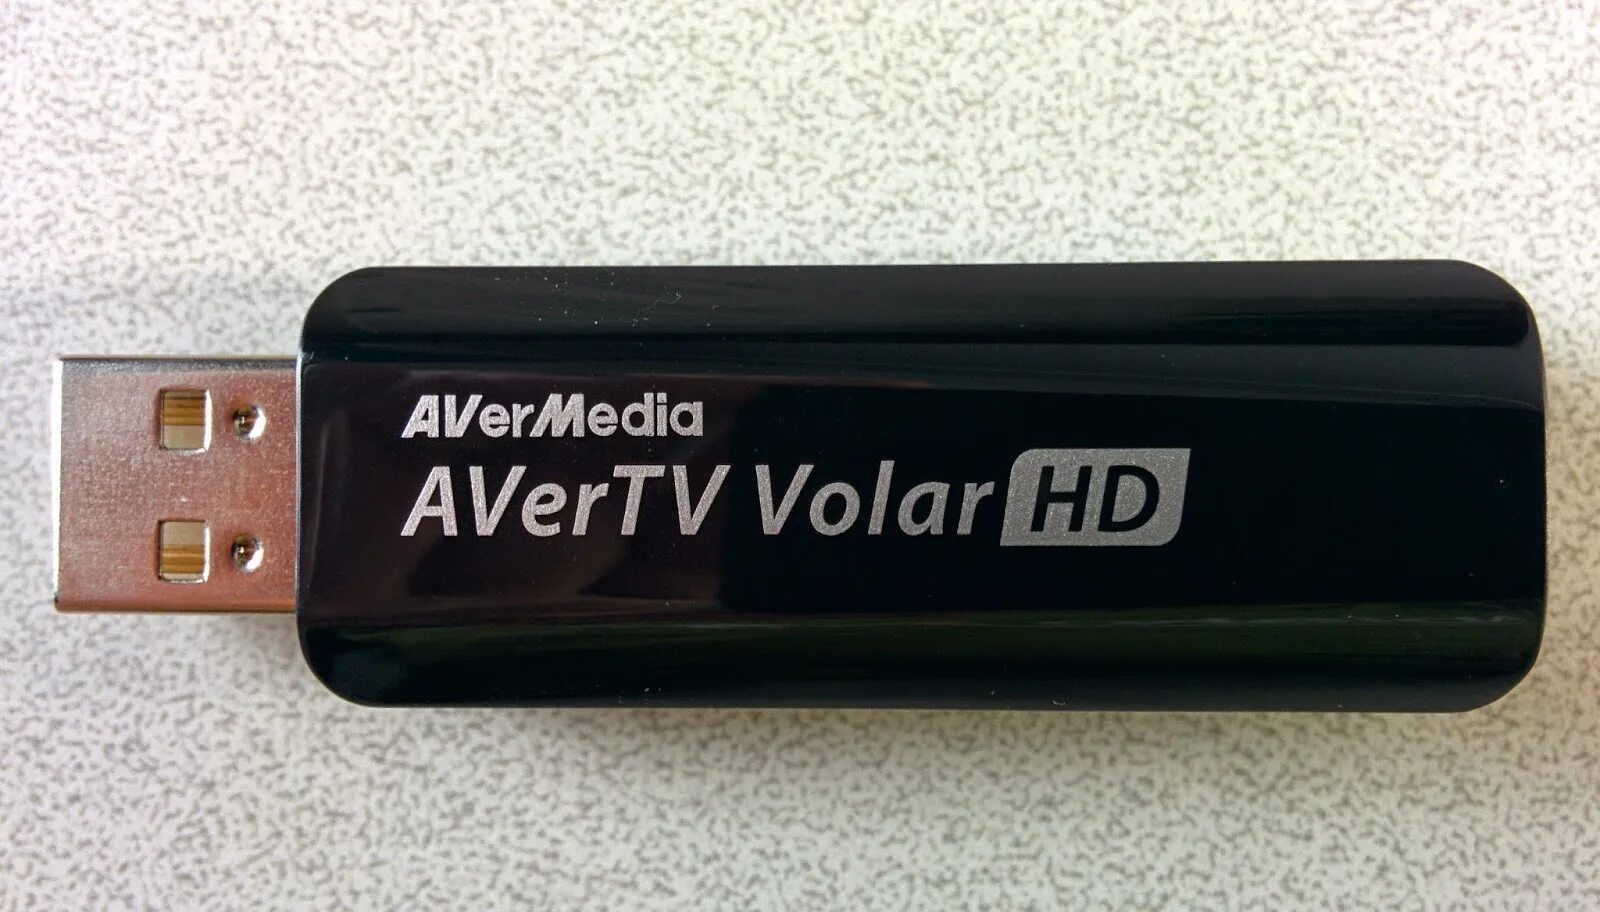 Avertv hybrid volar. AVERMEDIA USB DVB t2. Усилитель USB DVB-t2. Переходник для AVERTV Hybrid volar HX. AVERTV Hybrid volar m.